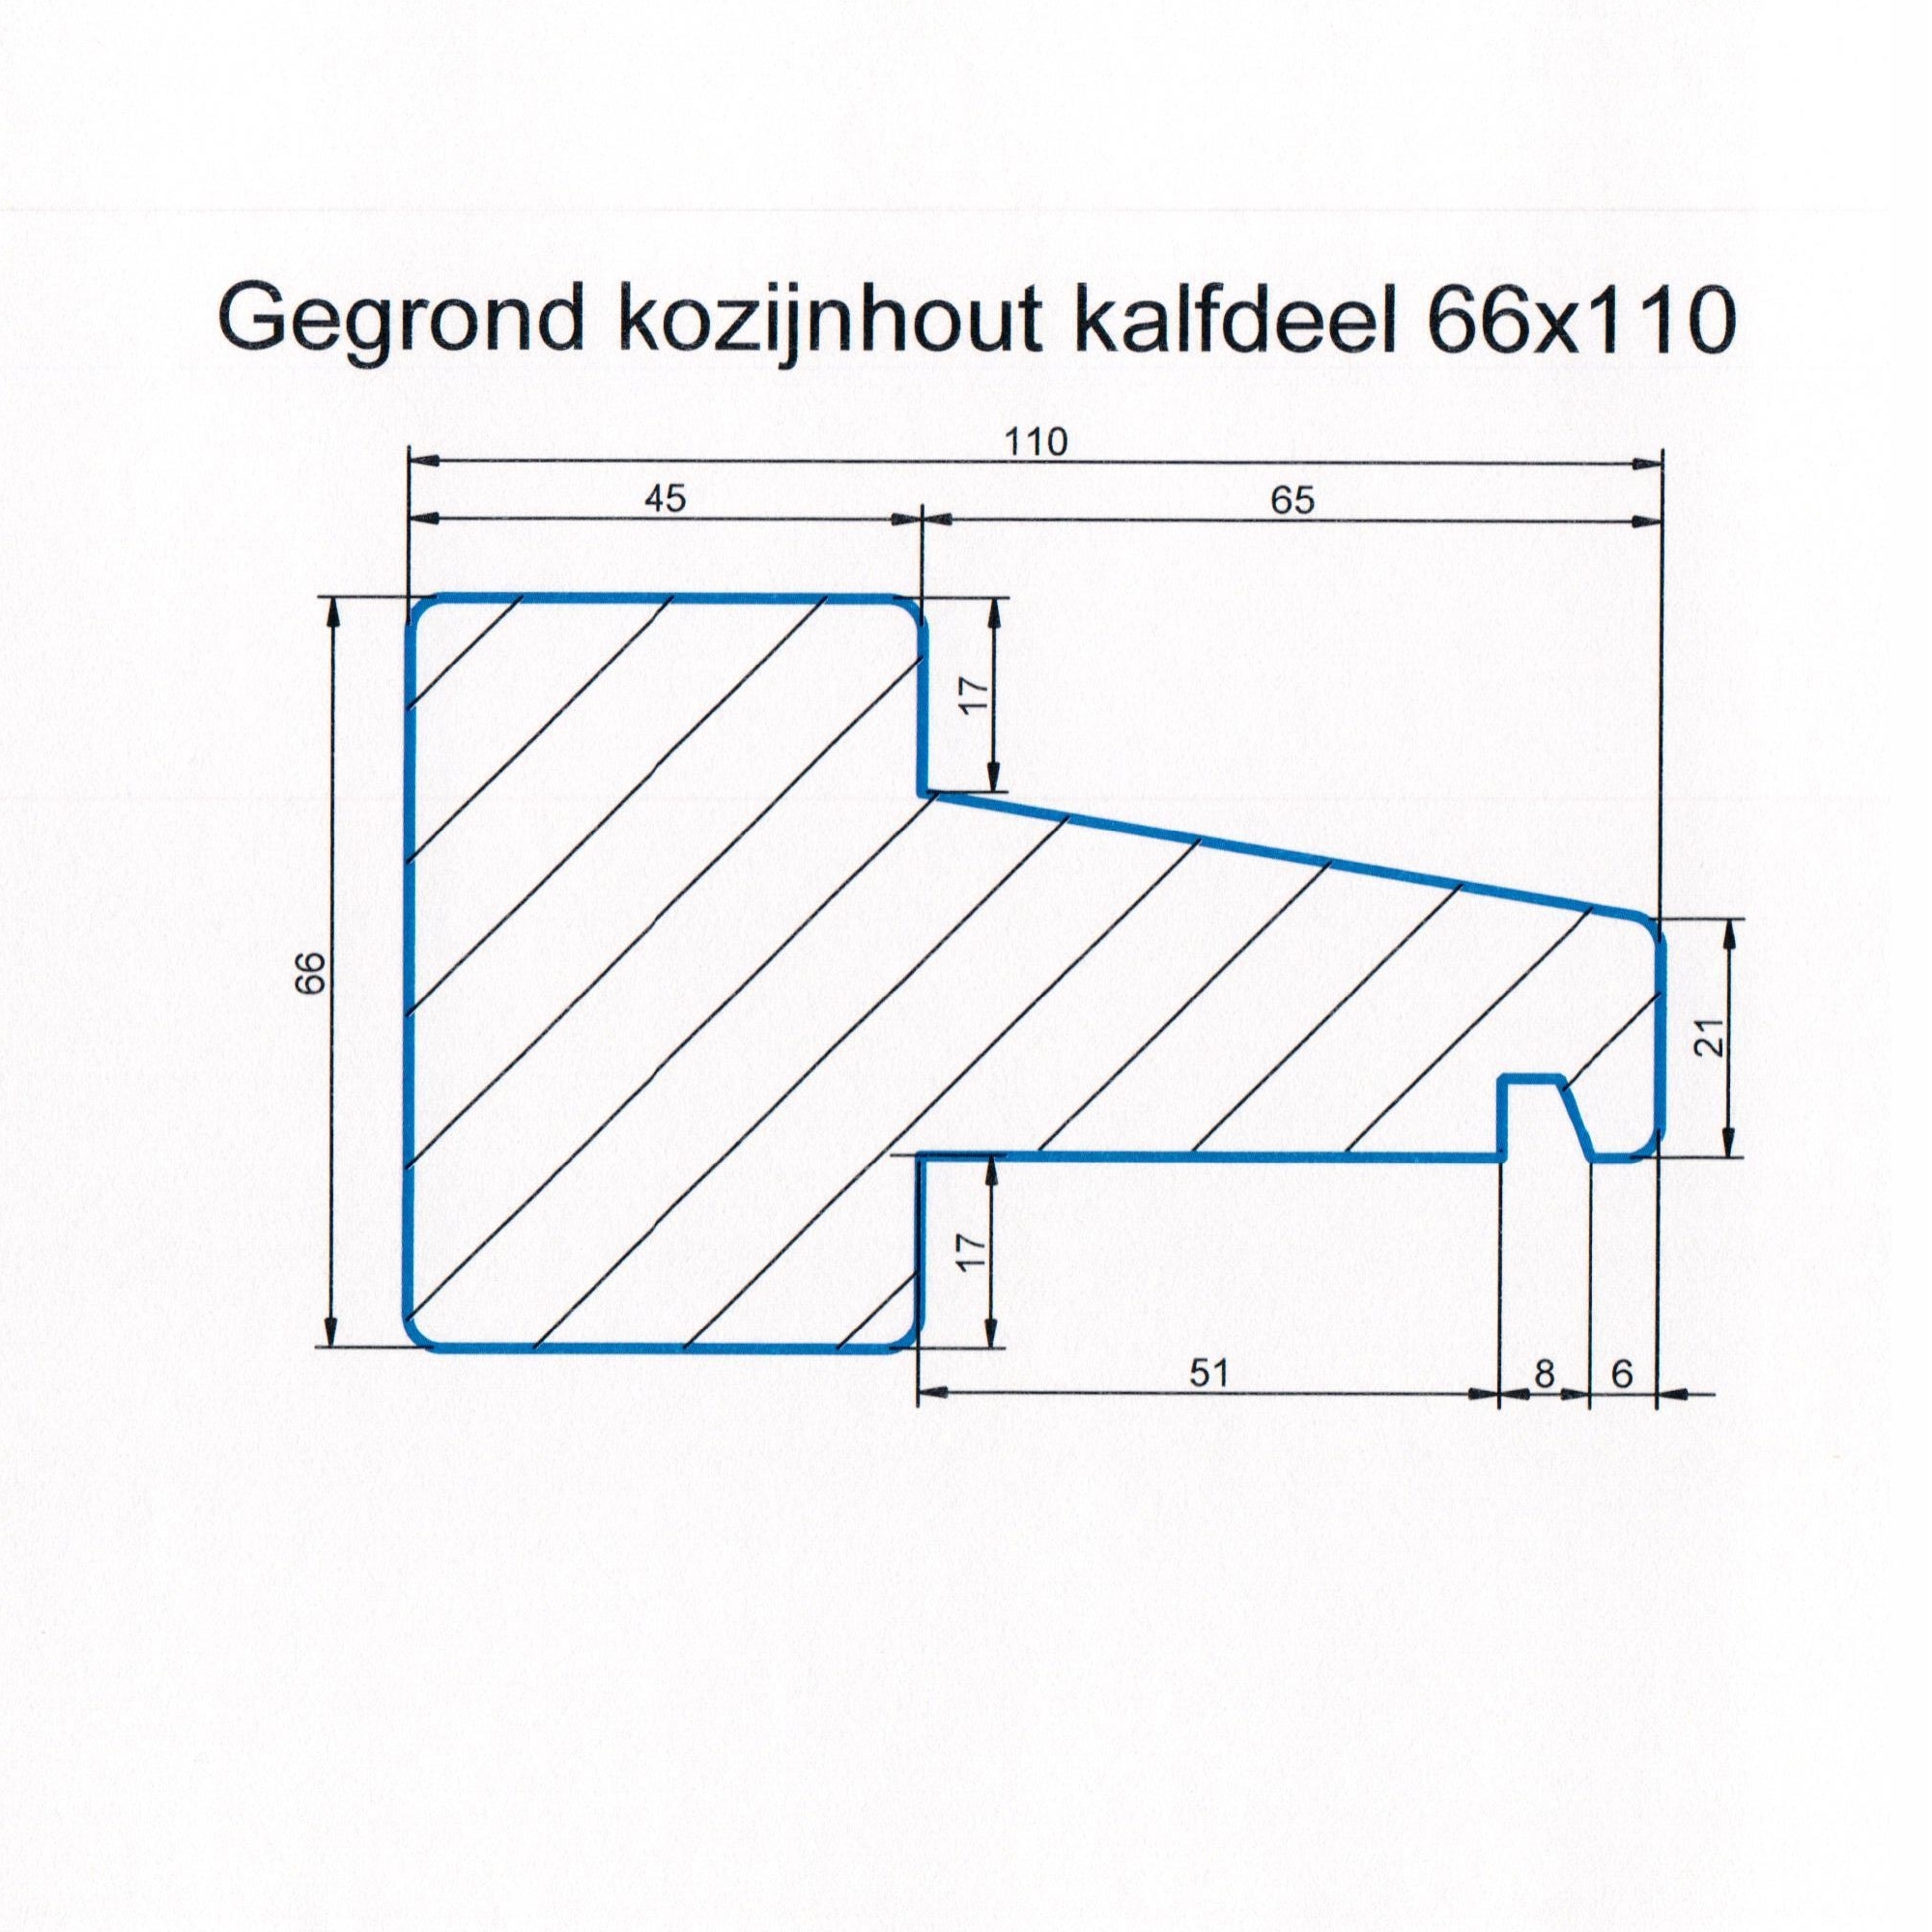 Hardhout 66x110 kozijnhout gegrond L=2360 kalfdeel